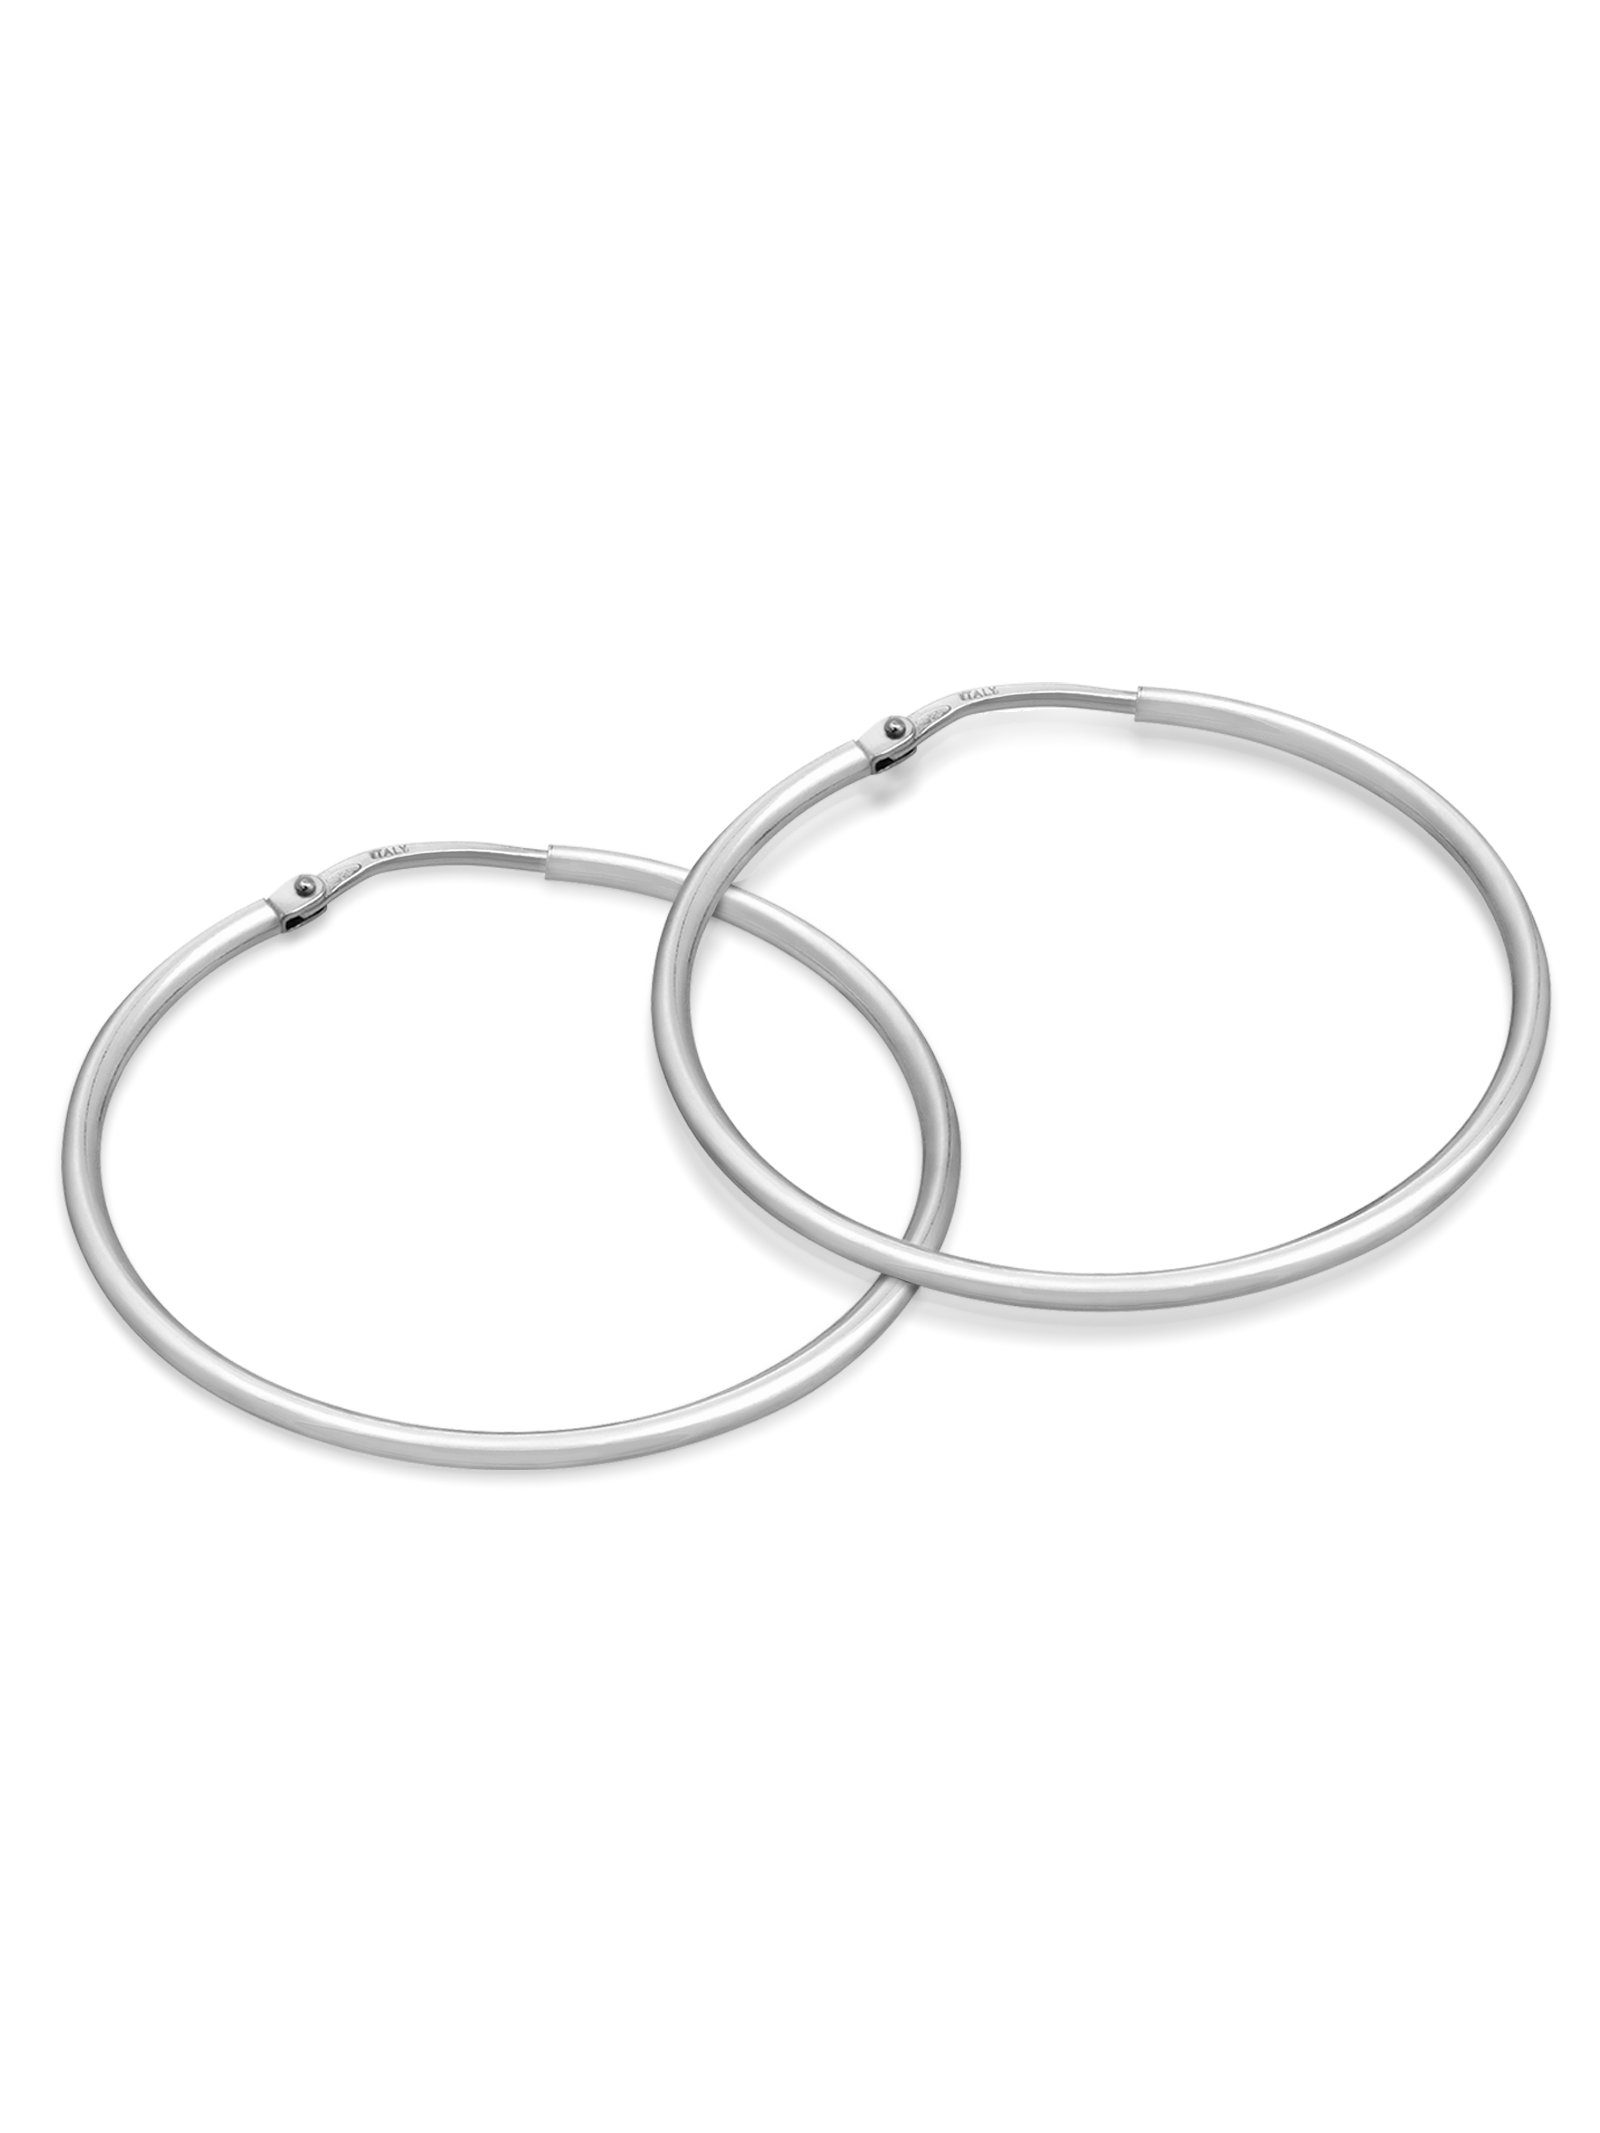 35mm groß, ORBIT Paar Damen rhodiniert rund Kreolen modabilé Silber Kreis, Ohrringe 925, Creolen kreisförmig